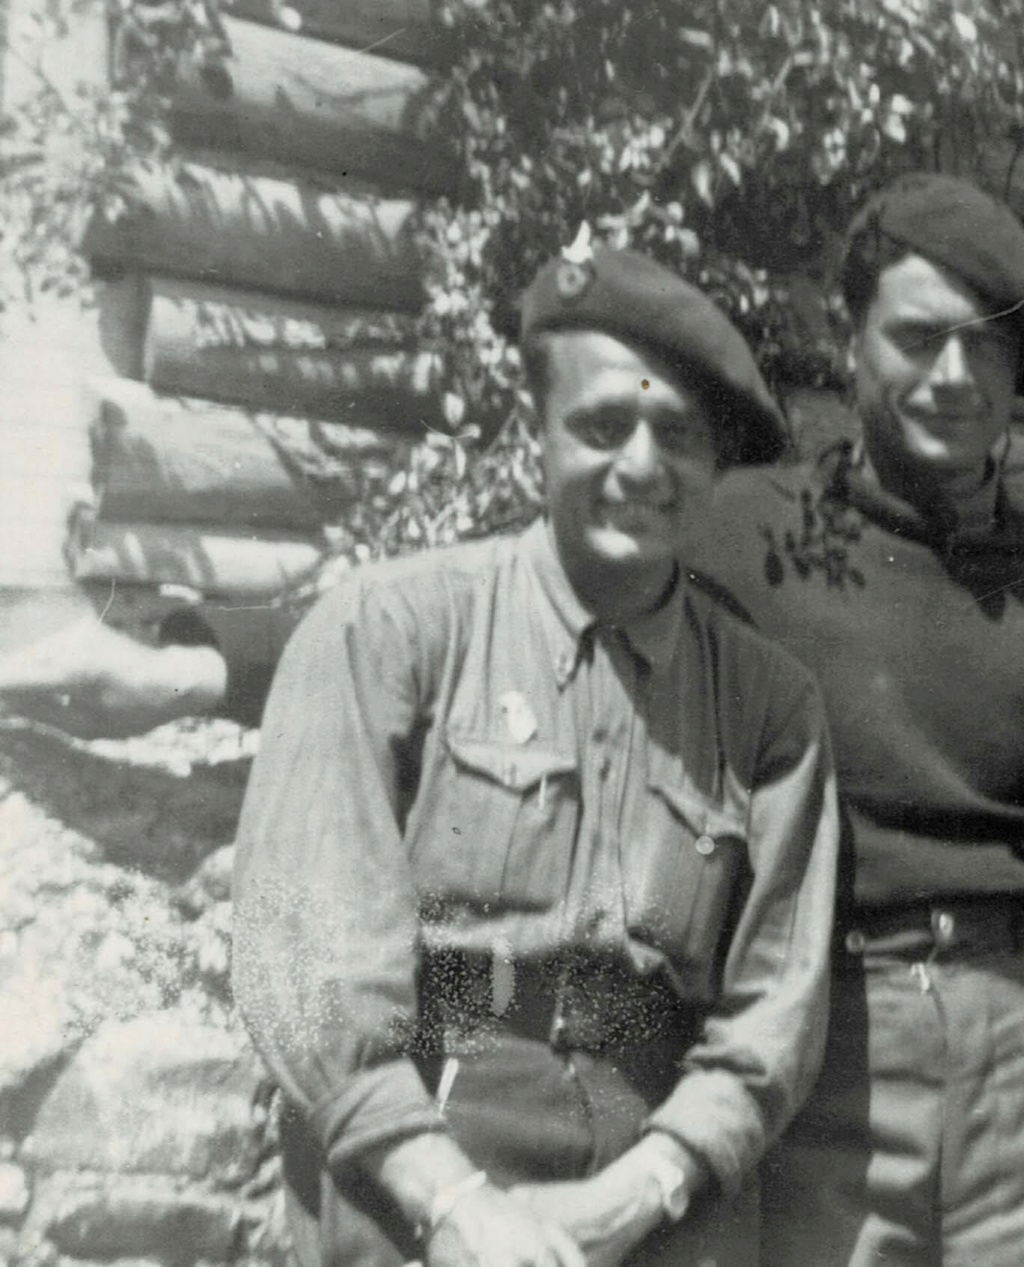 Soldats juillet 1940 à identifier  Receiv21